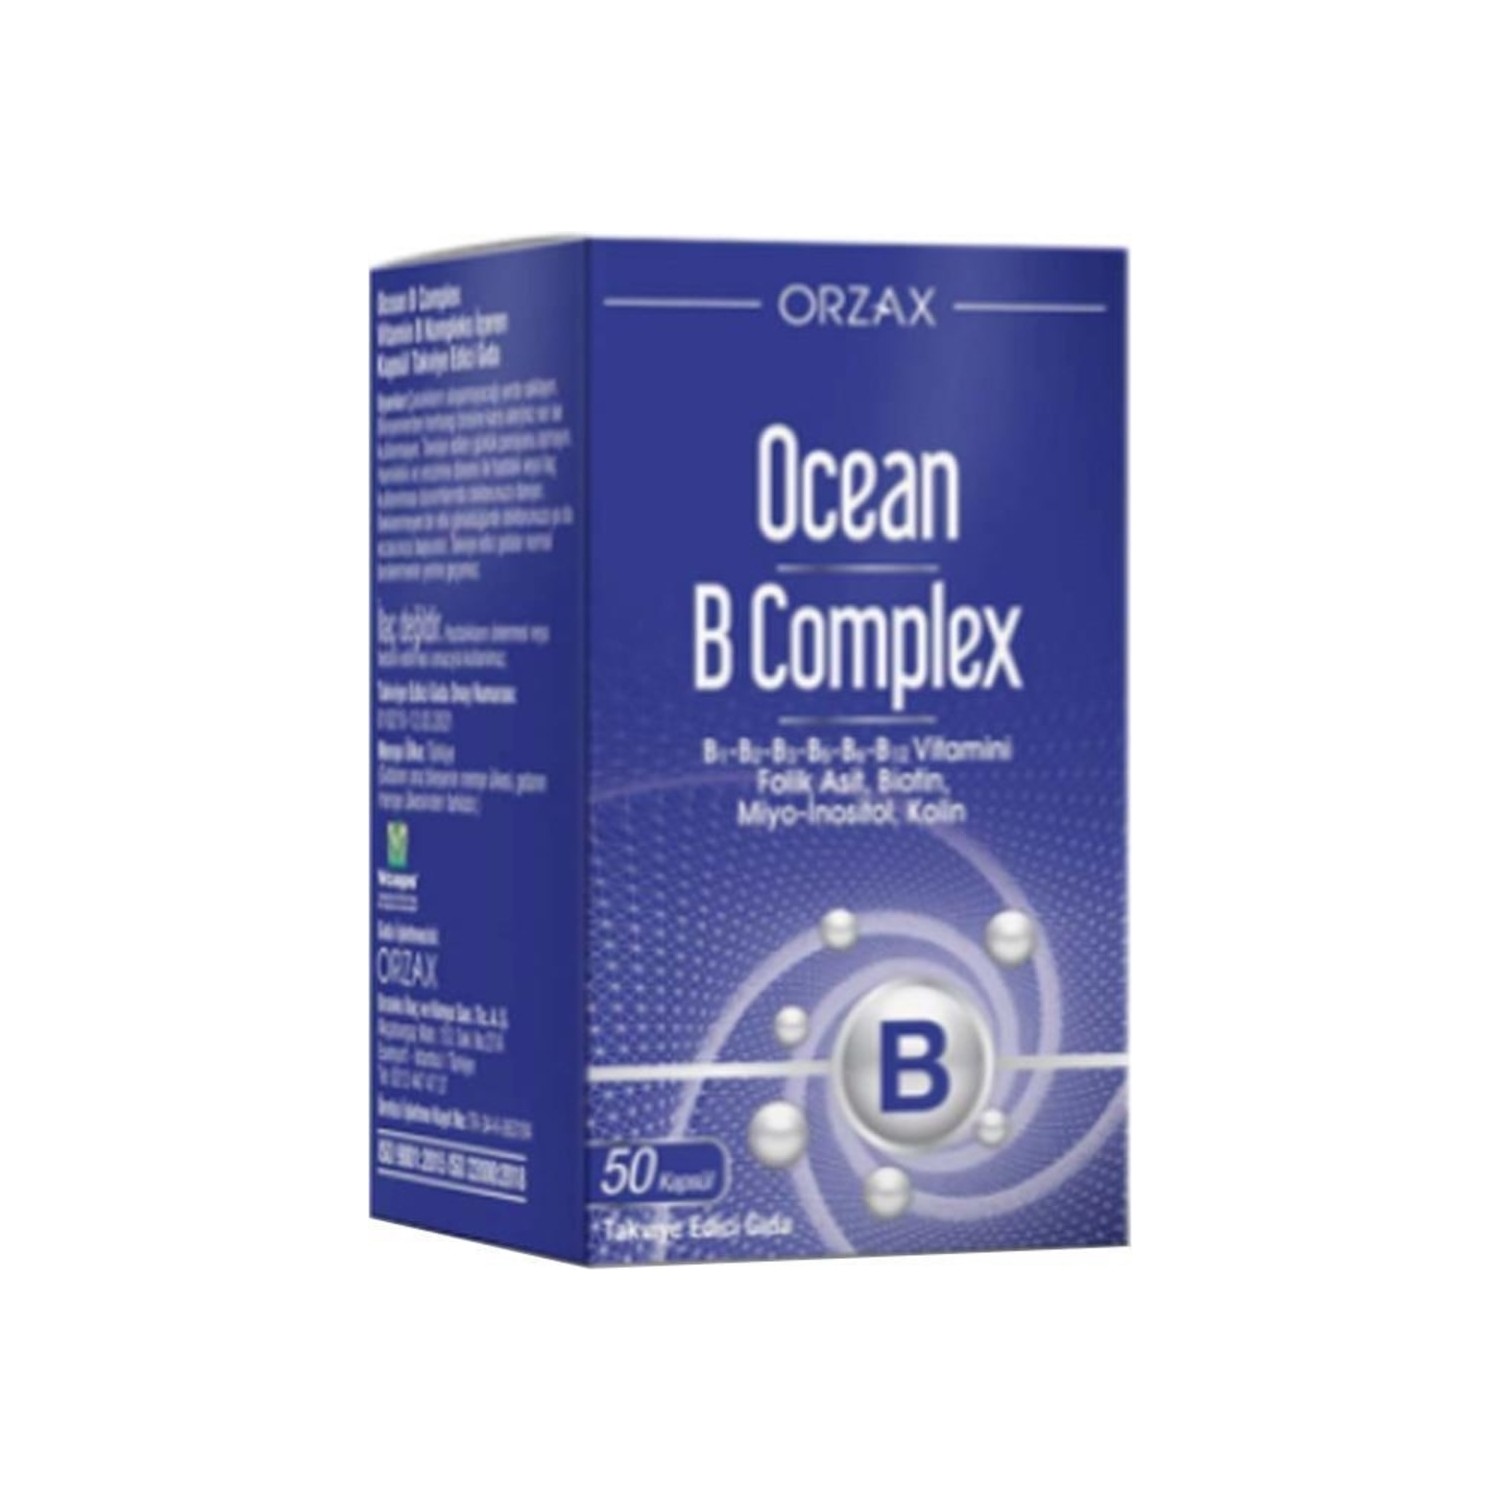 Пищевая комплексная добавка Ocean Orzax B Supplementary Food, 50 капсул фолиевая кислота с витаминами b6 и b12 50 таблеток по 0 1 г